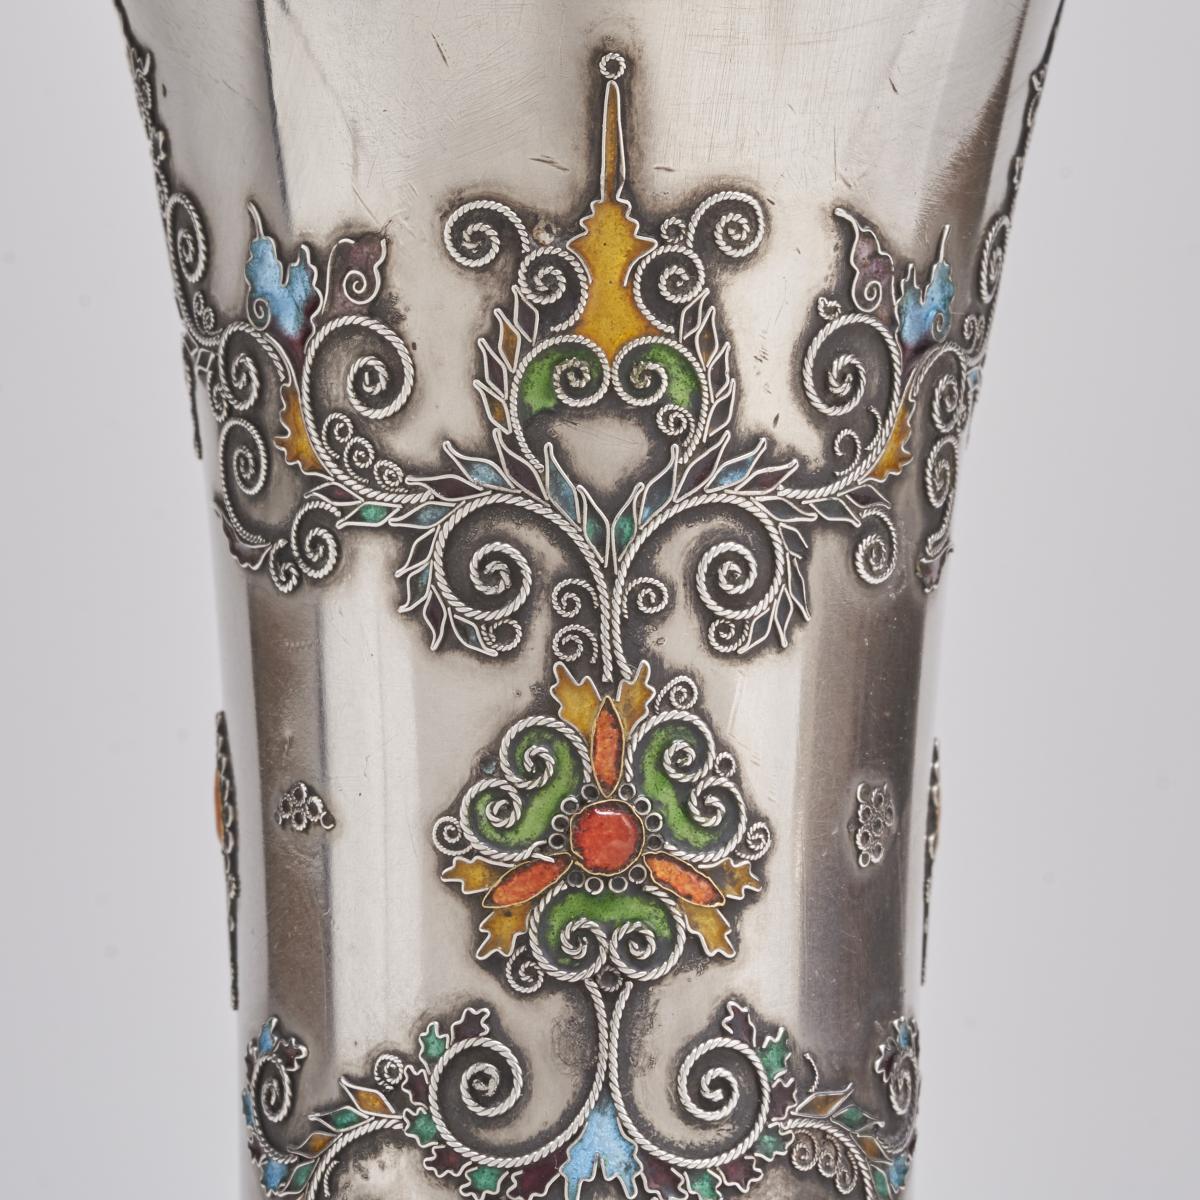 Japanese, late 19th Century Silver vases with Shibuichi patination